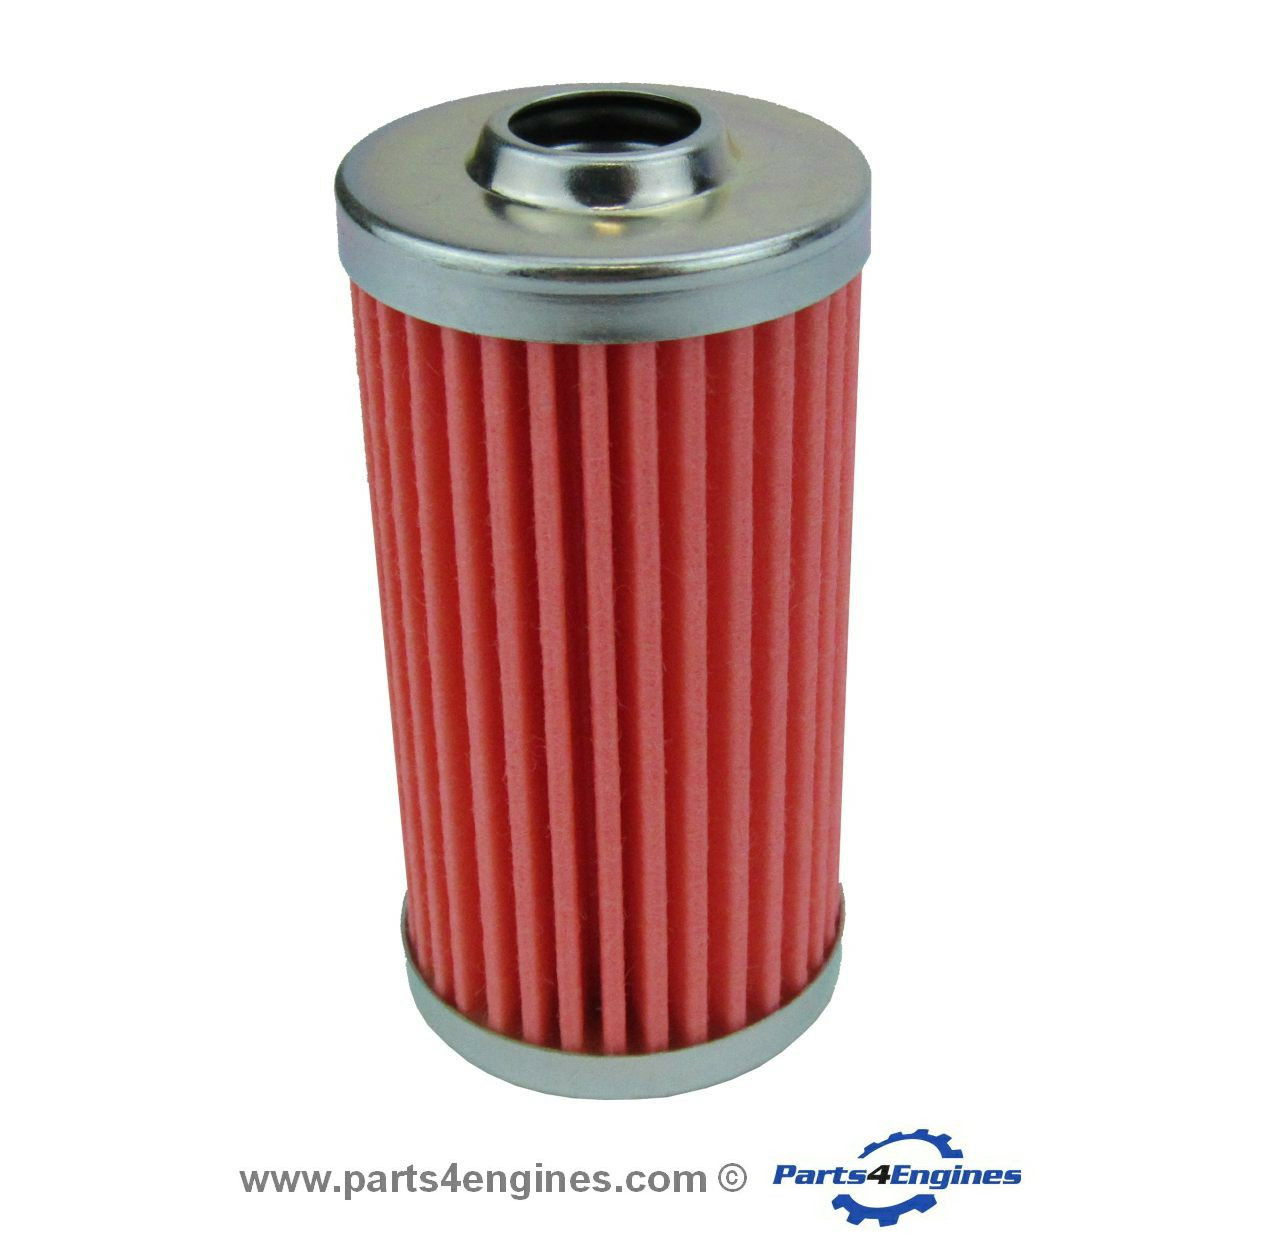 Perkins 403C-07 Fuel filter, from parts4engines.com